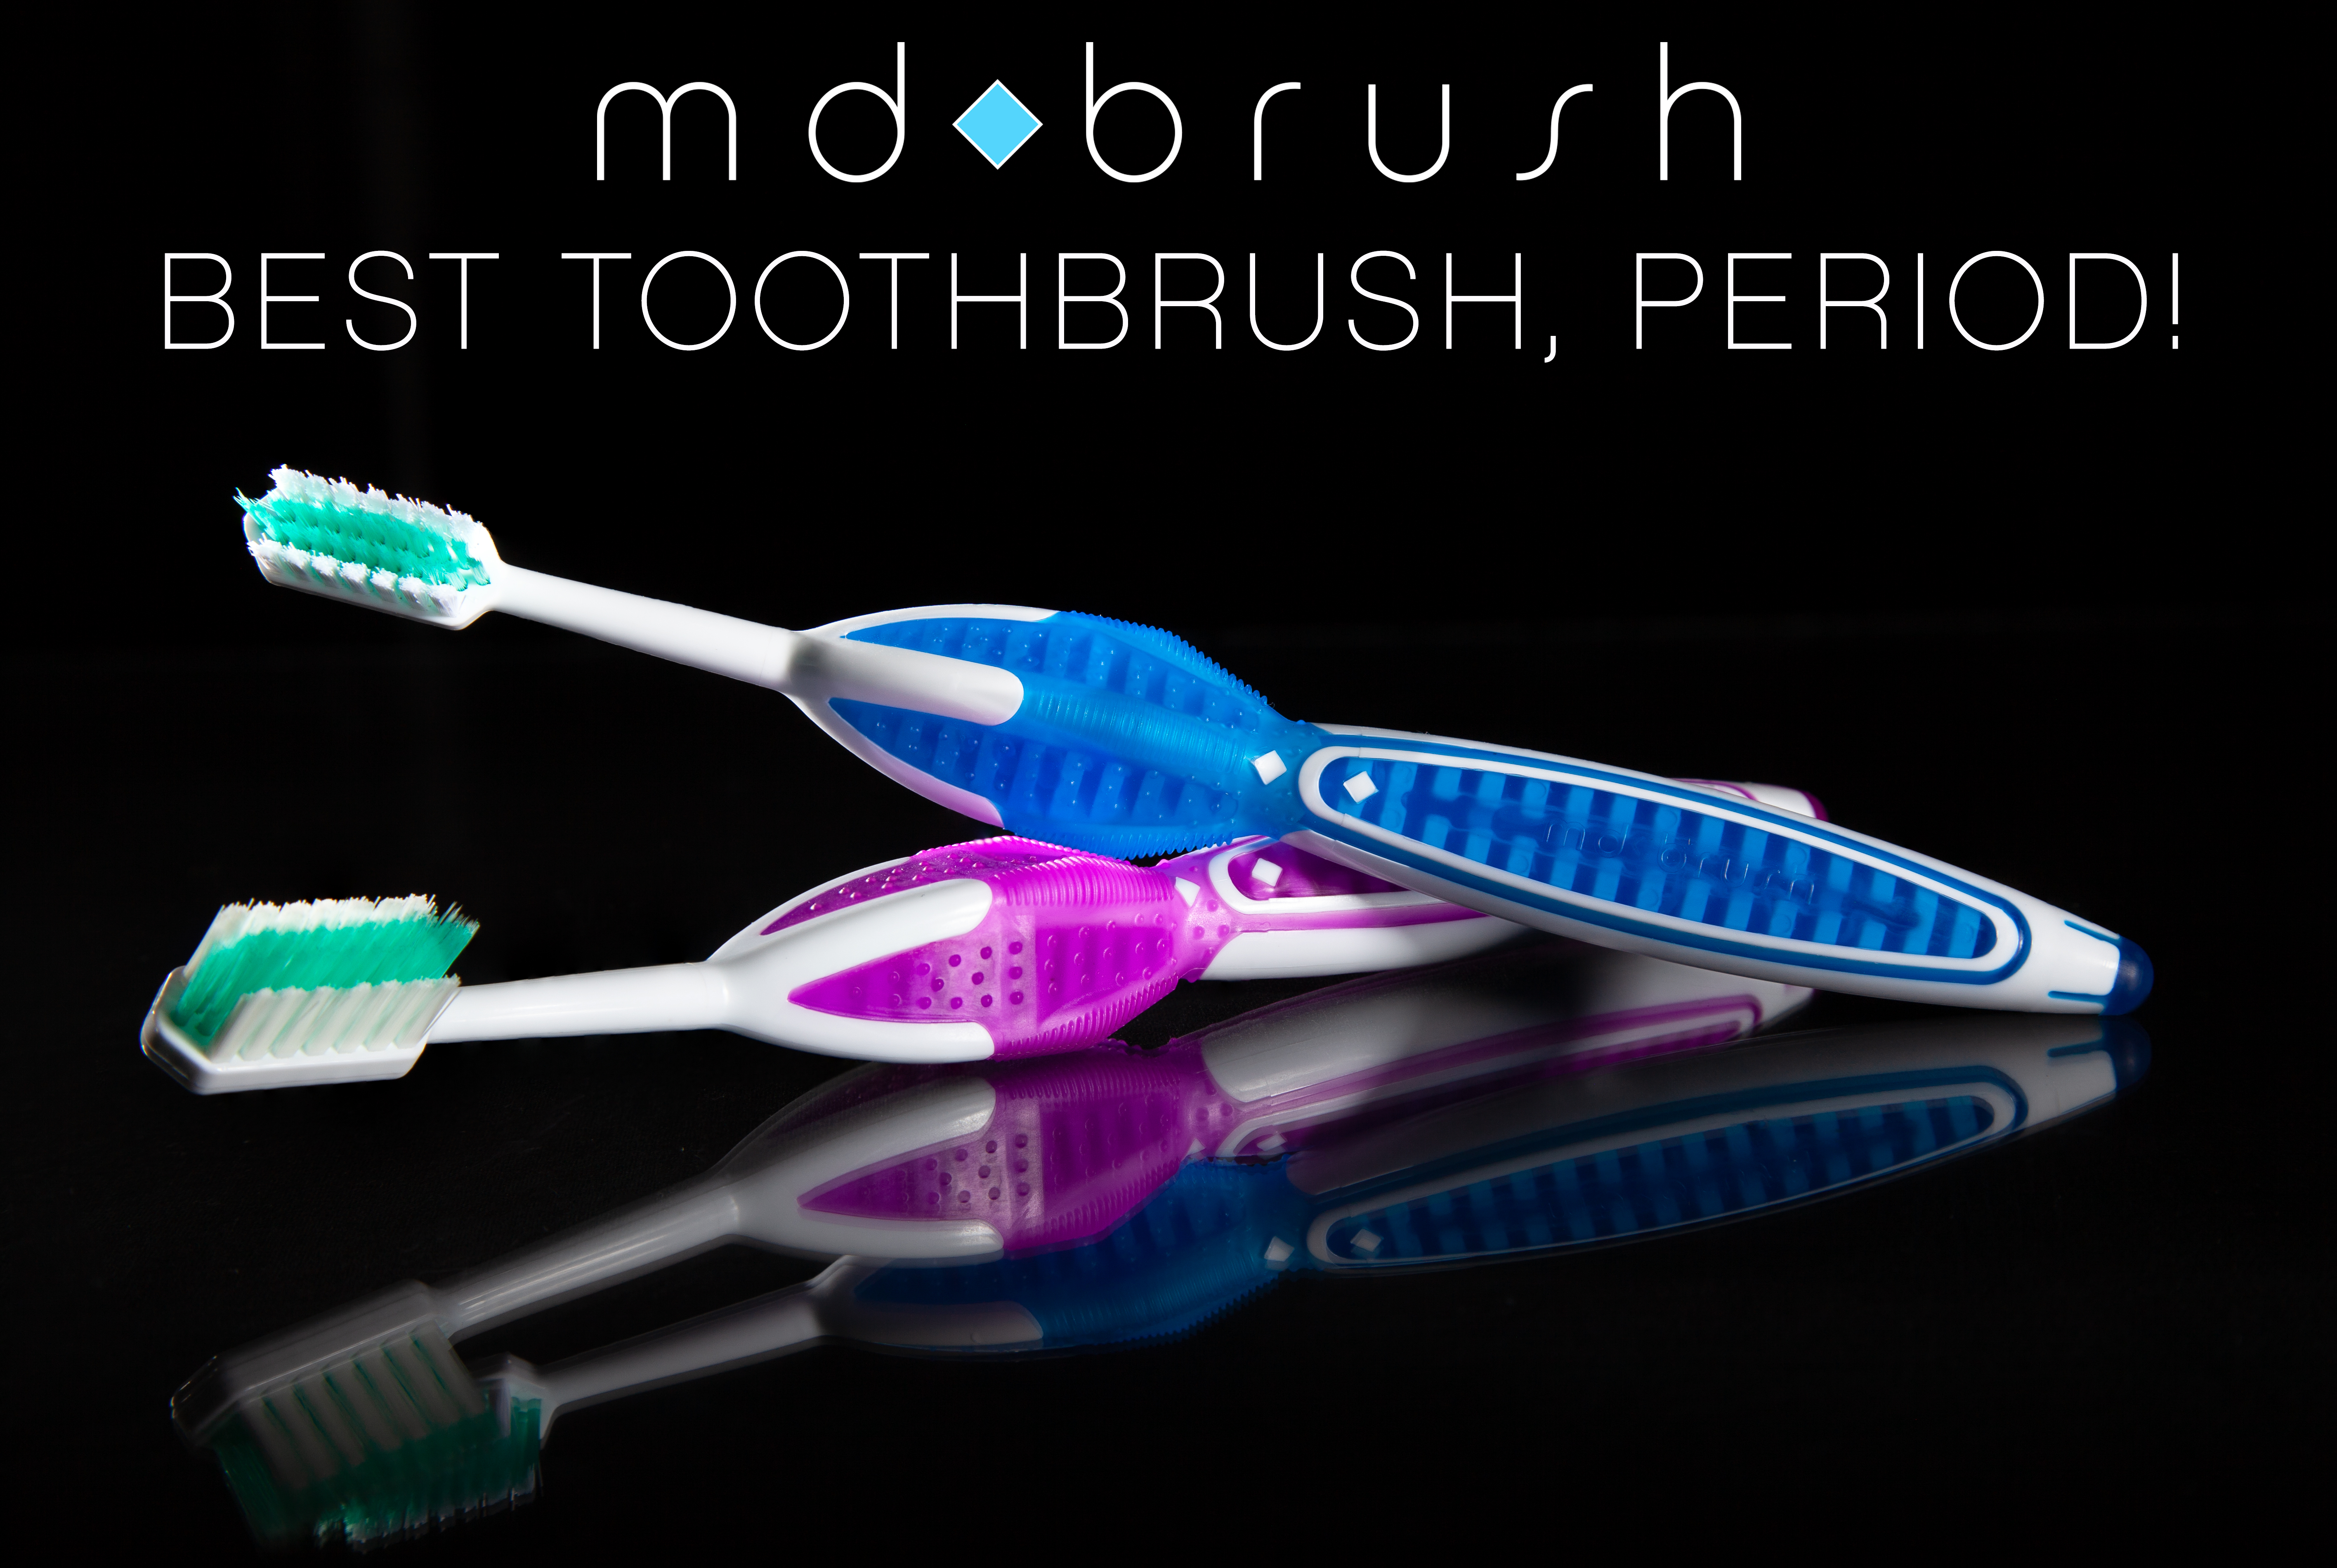 best toothbrush md brush